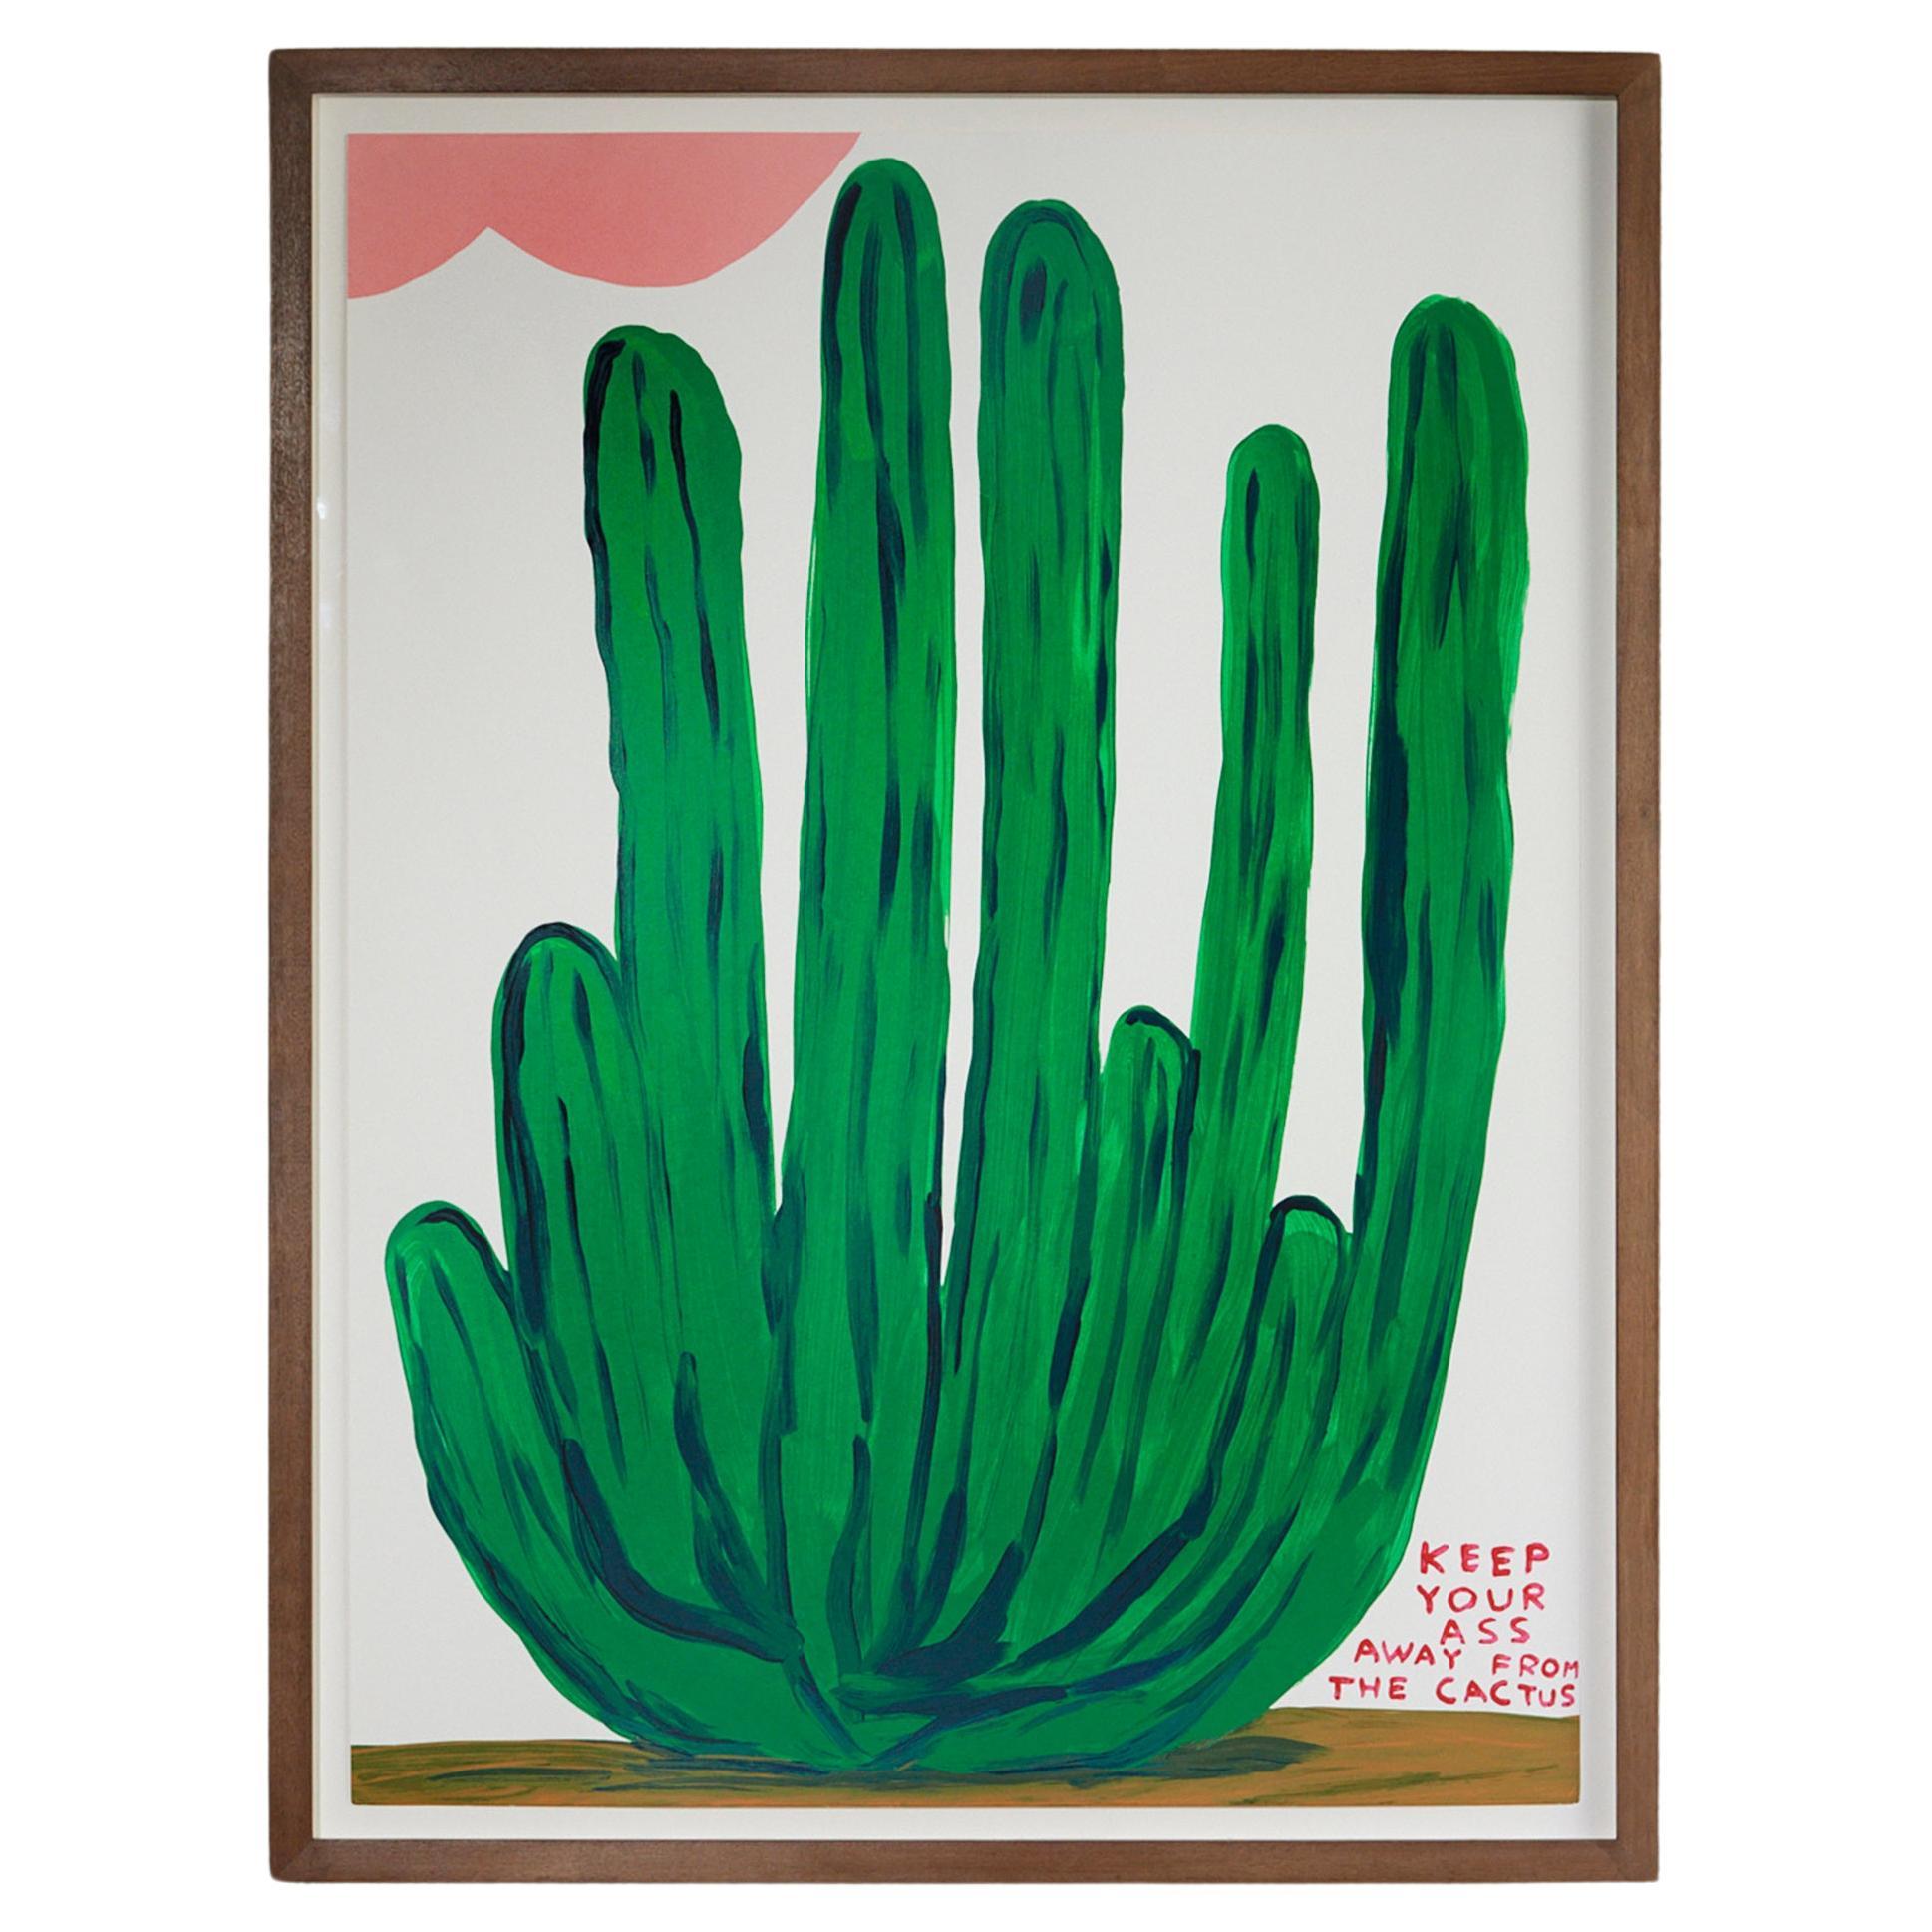 « Keep Your Ass Away From the Cactus » de David Shrigley en vente